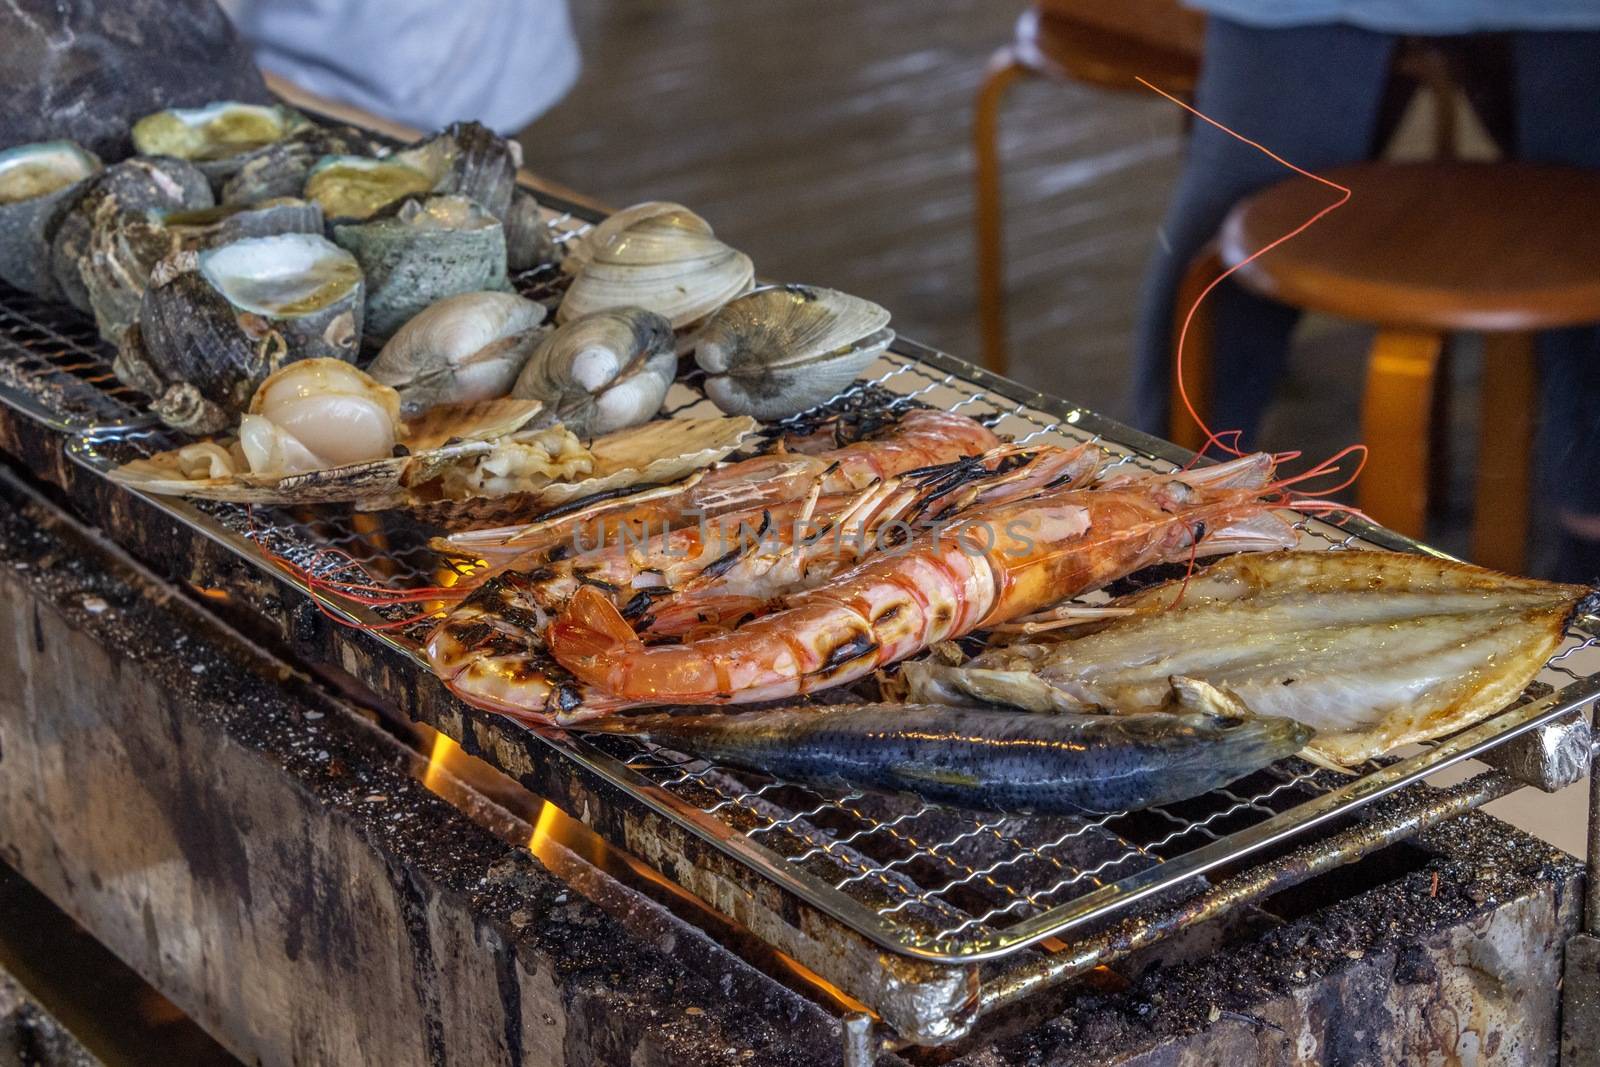 turban shell,clam,Quahog,shrimp,scallop shell,Horse mackerel, Charcoal-grilled seafood.in chiba-ken JAPAN by Umbrella